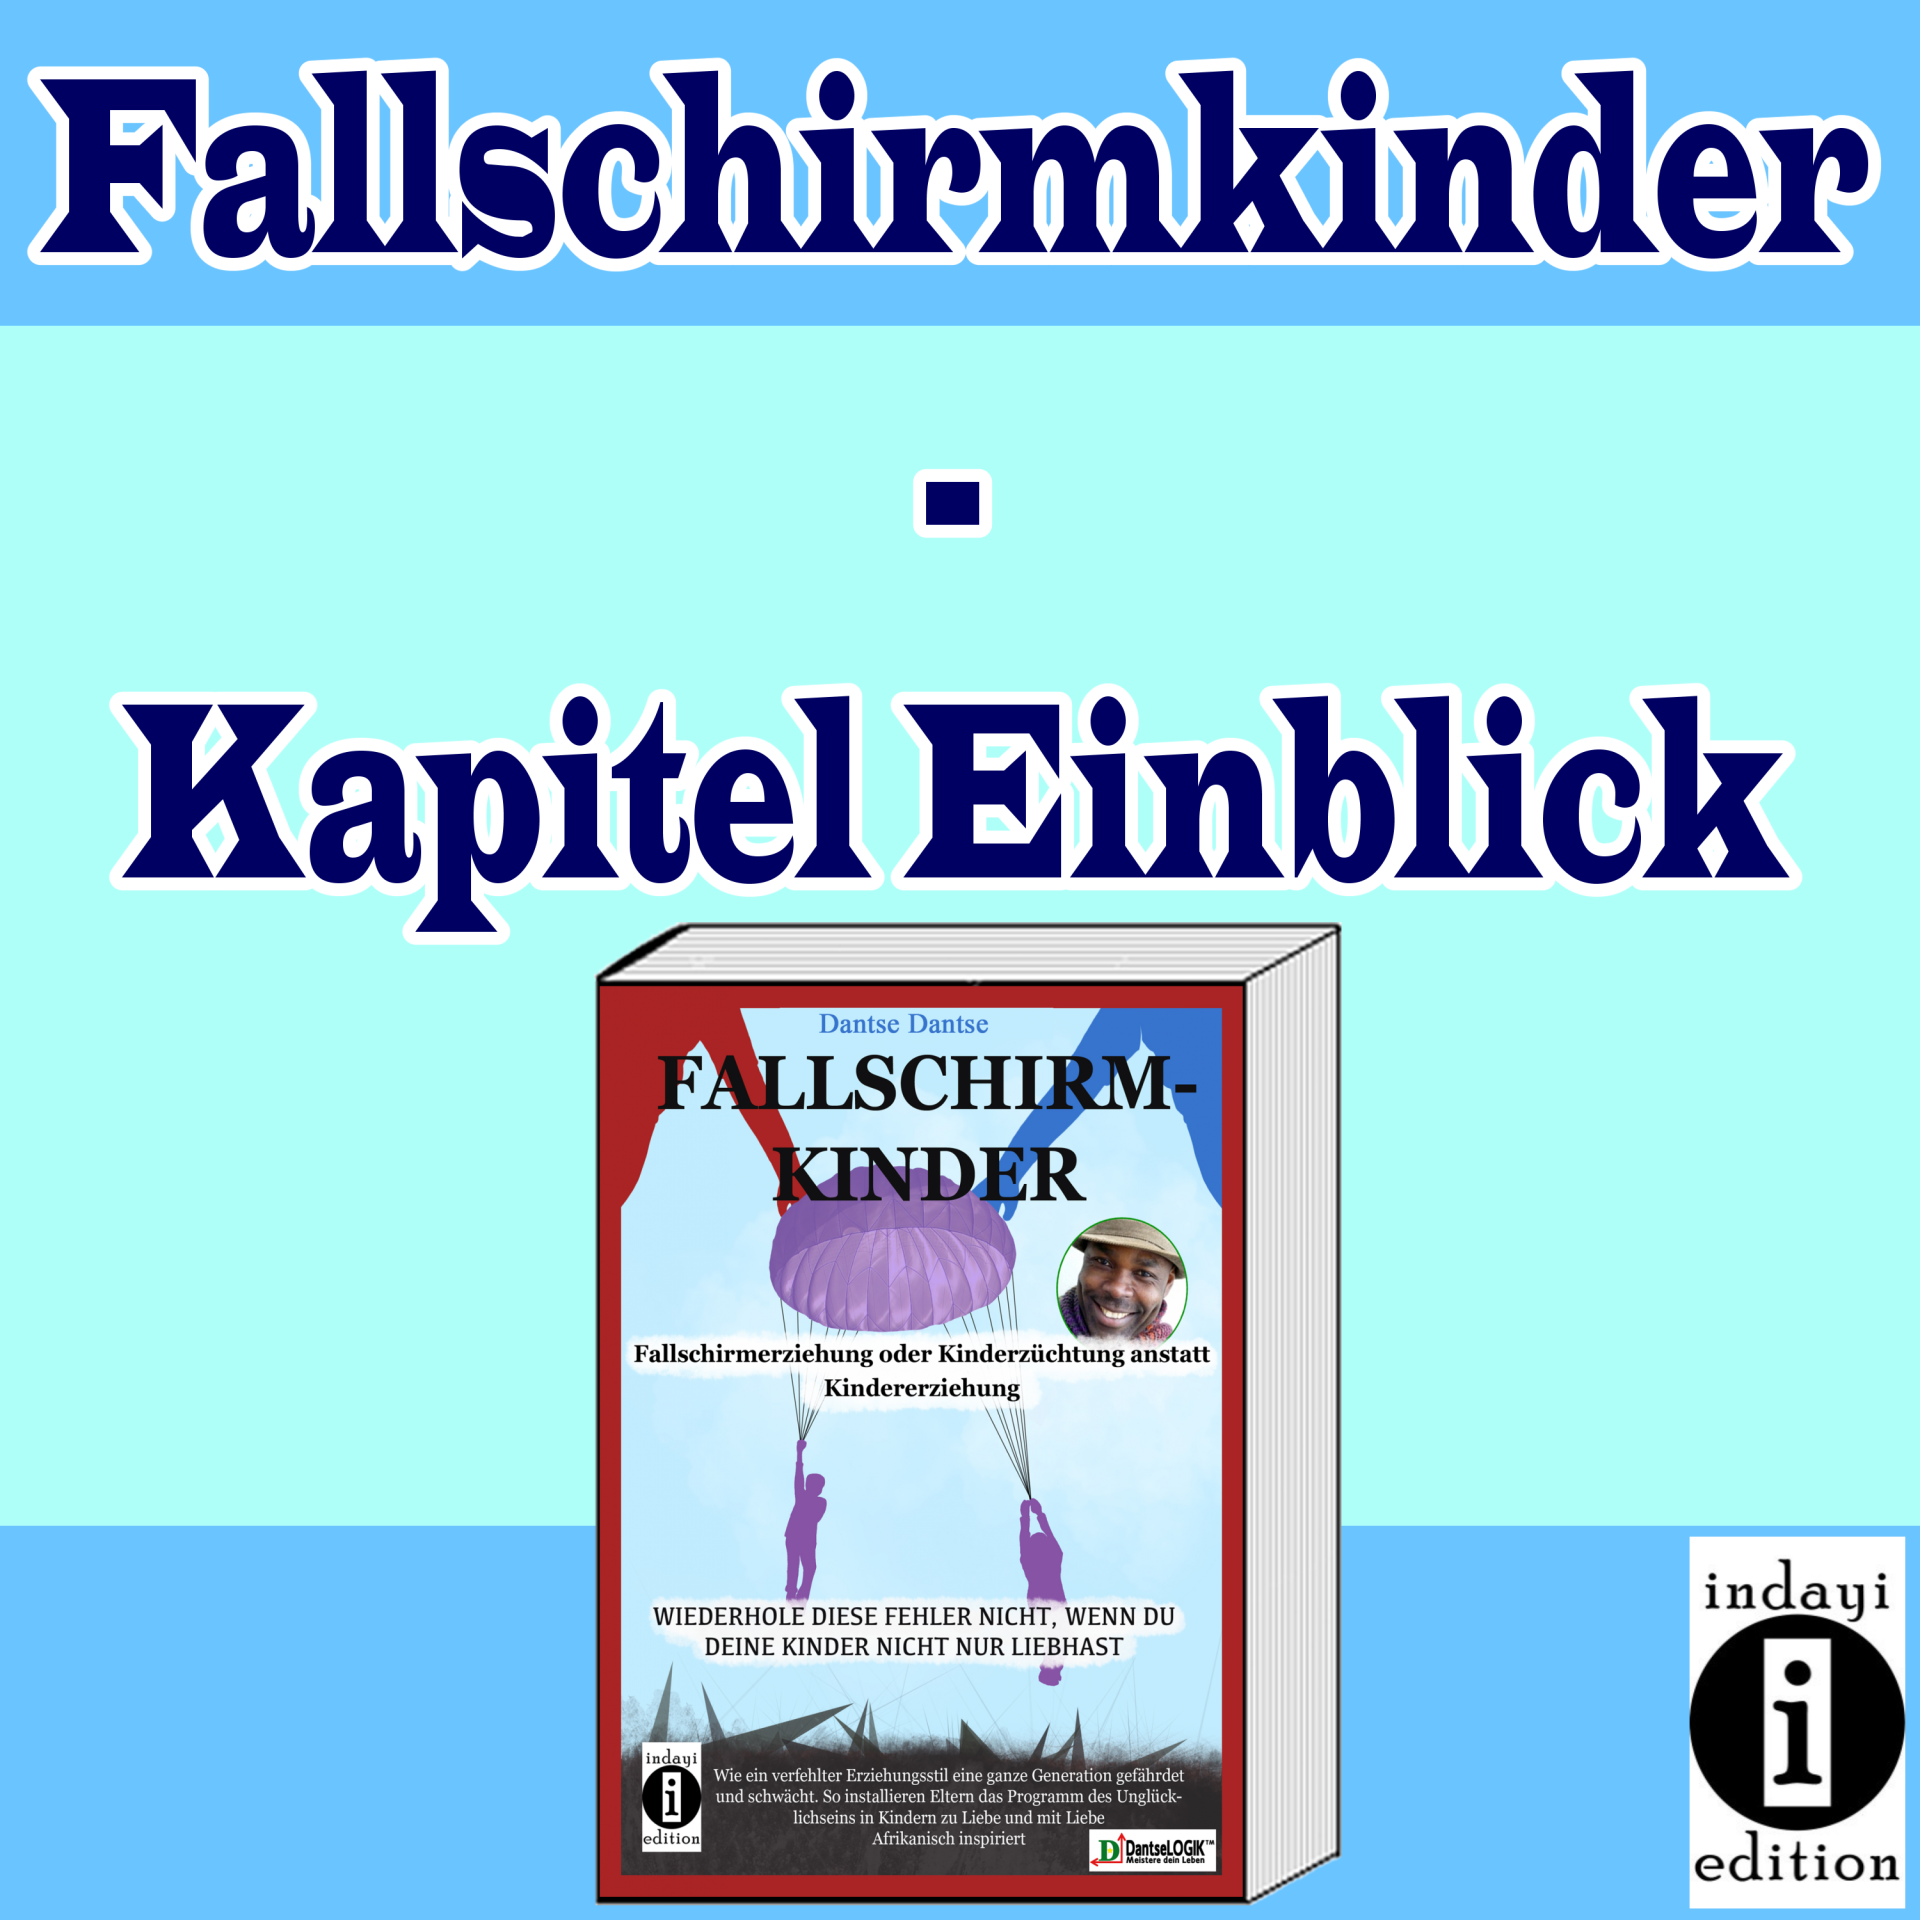 You are currently viewing Fallschirmkinder – Kapitel Einblick // Spruch des Tages 17.09.2021